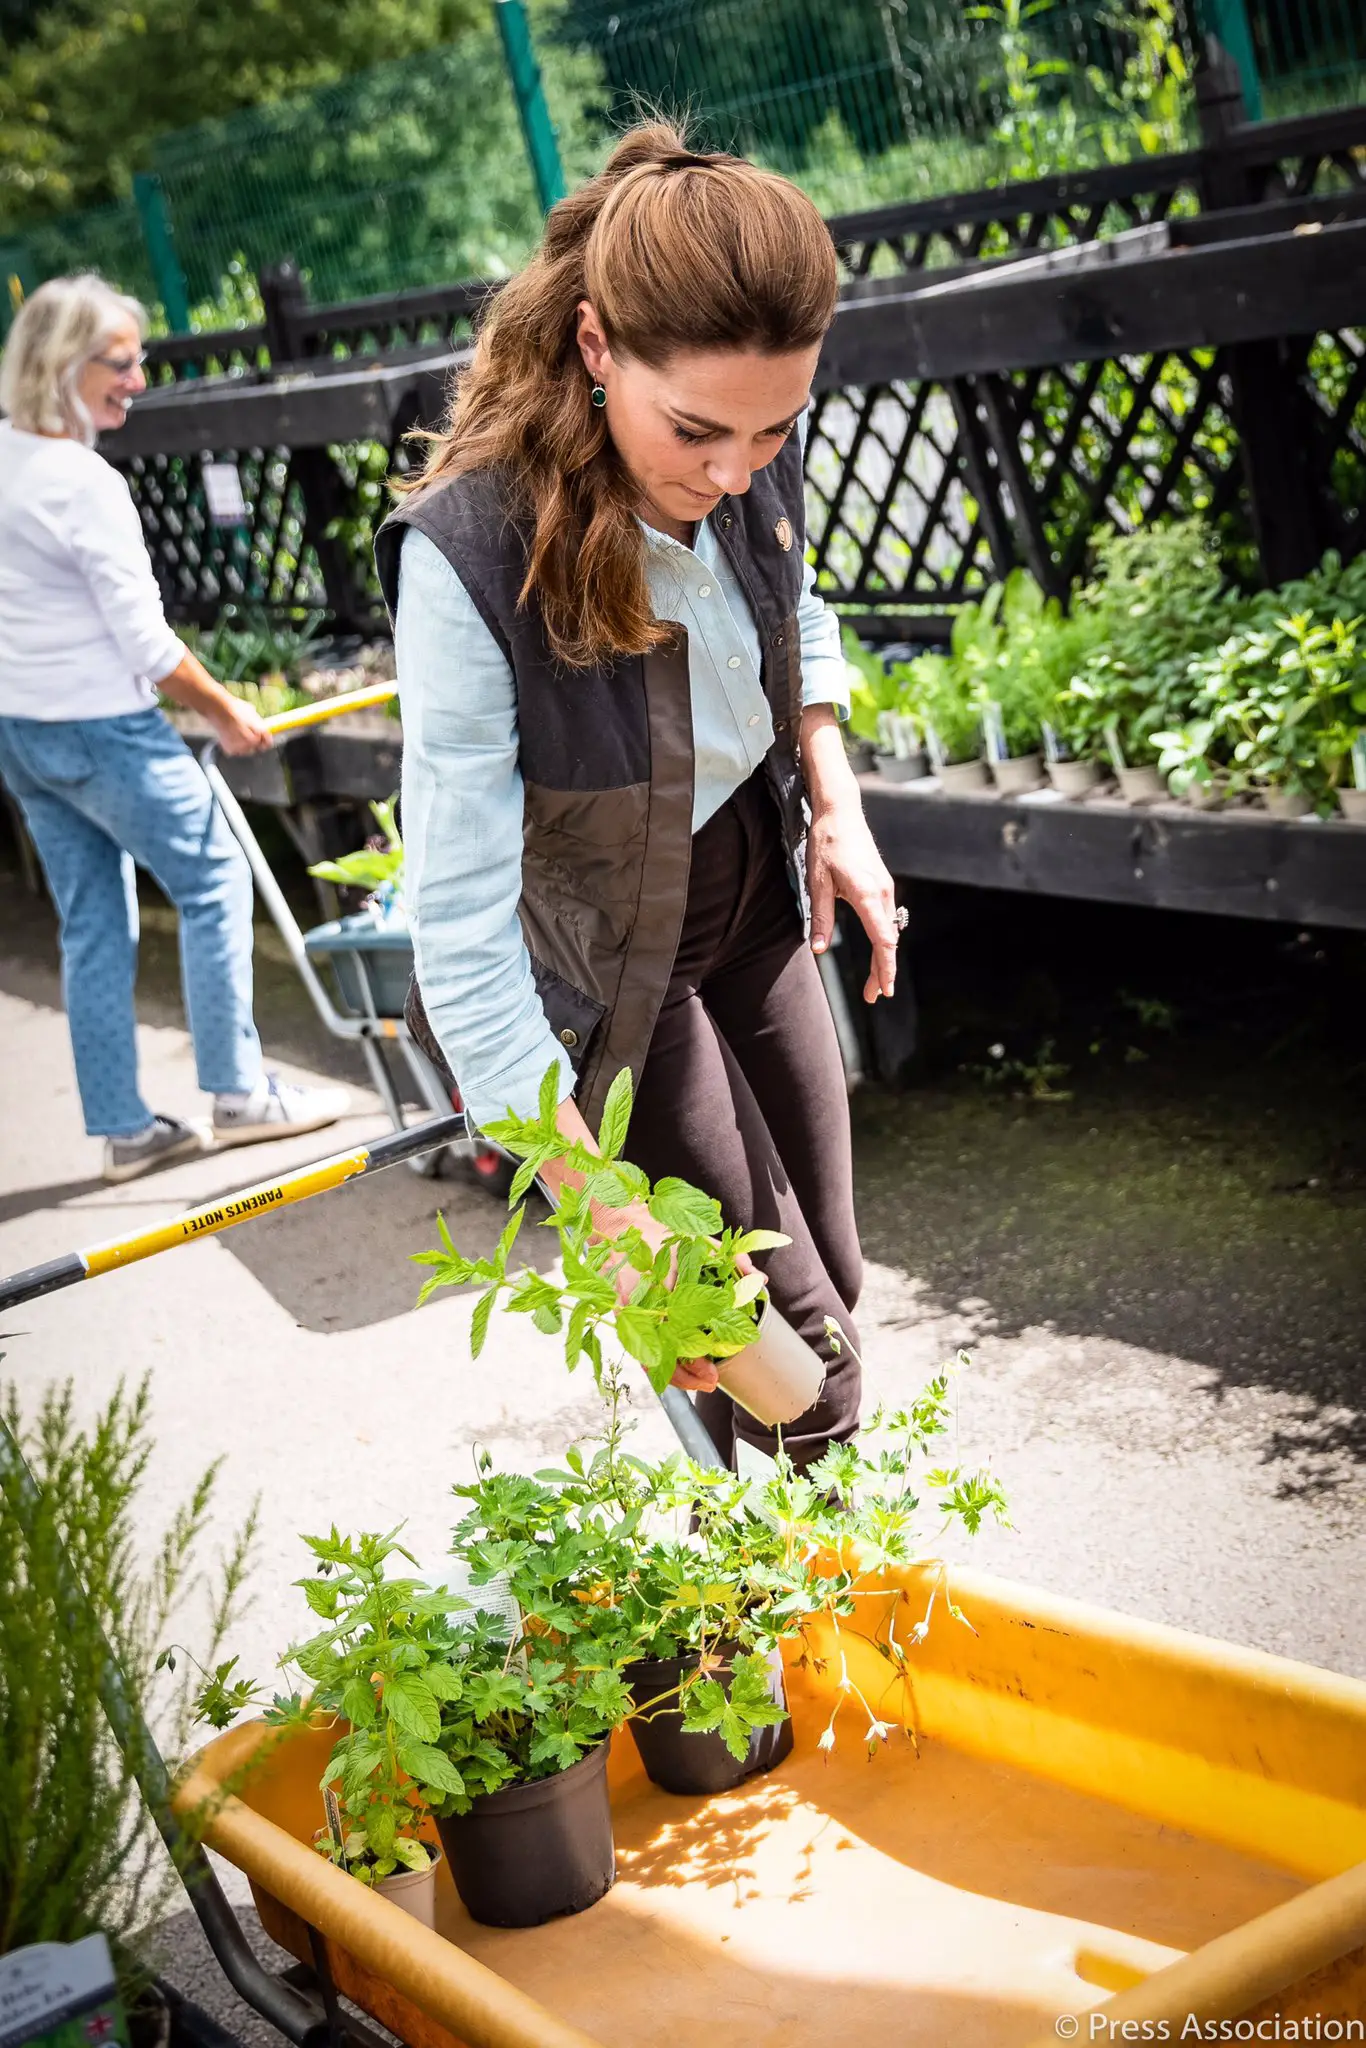 The Duchess of Cambridge visited Falkenham Garden in Nofrolk to buy plants